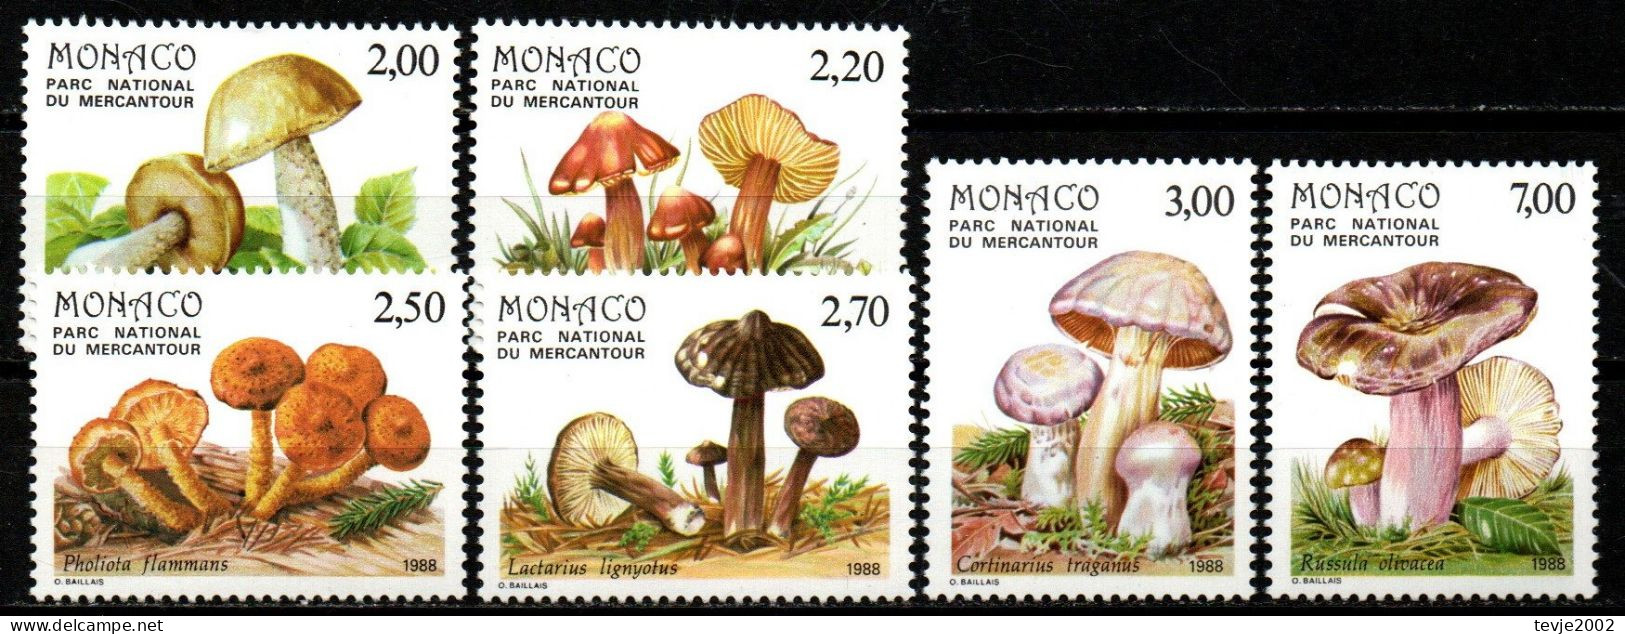 Monaco 1988 - Mi.Nr. 1861 - 1866 - Postfrisch MNH - Pilze Mushrooms - Mushrooms